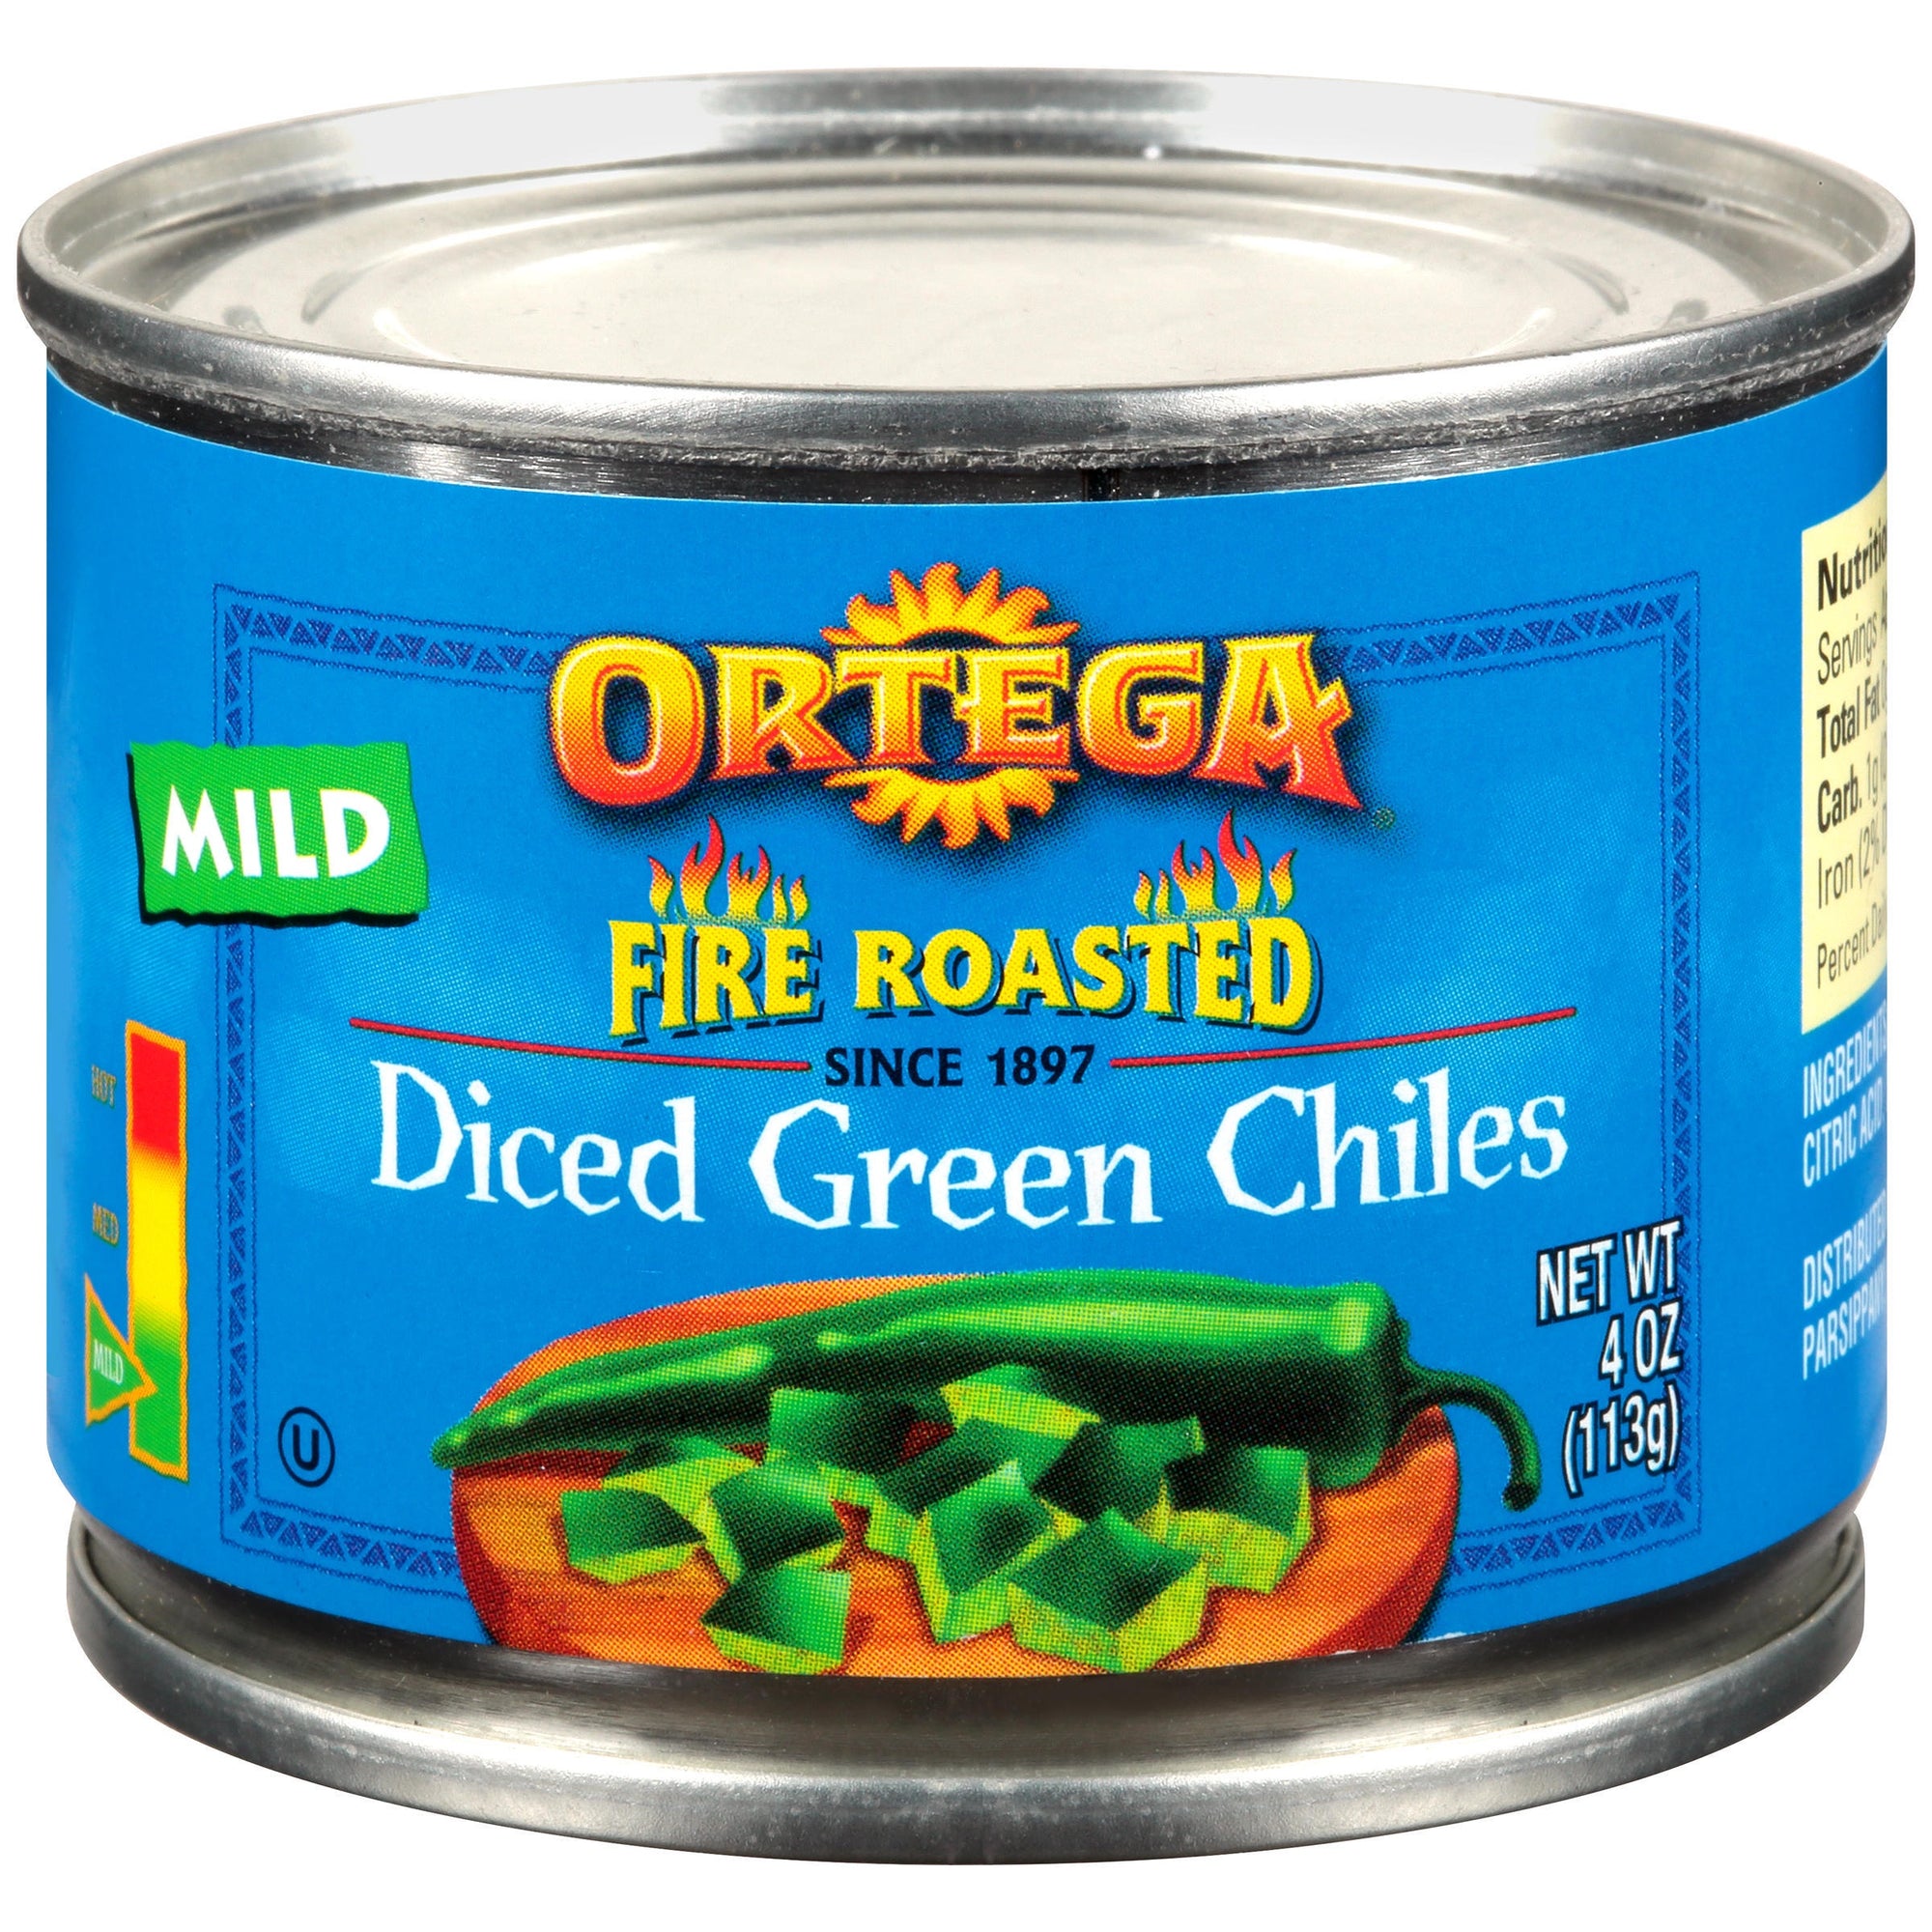 ORTEGA Green Chiles Fire Roasted 4oz